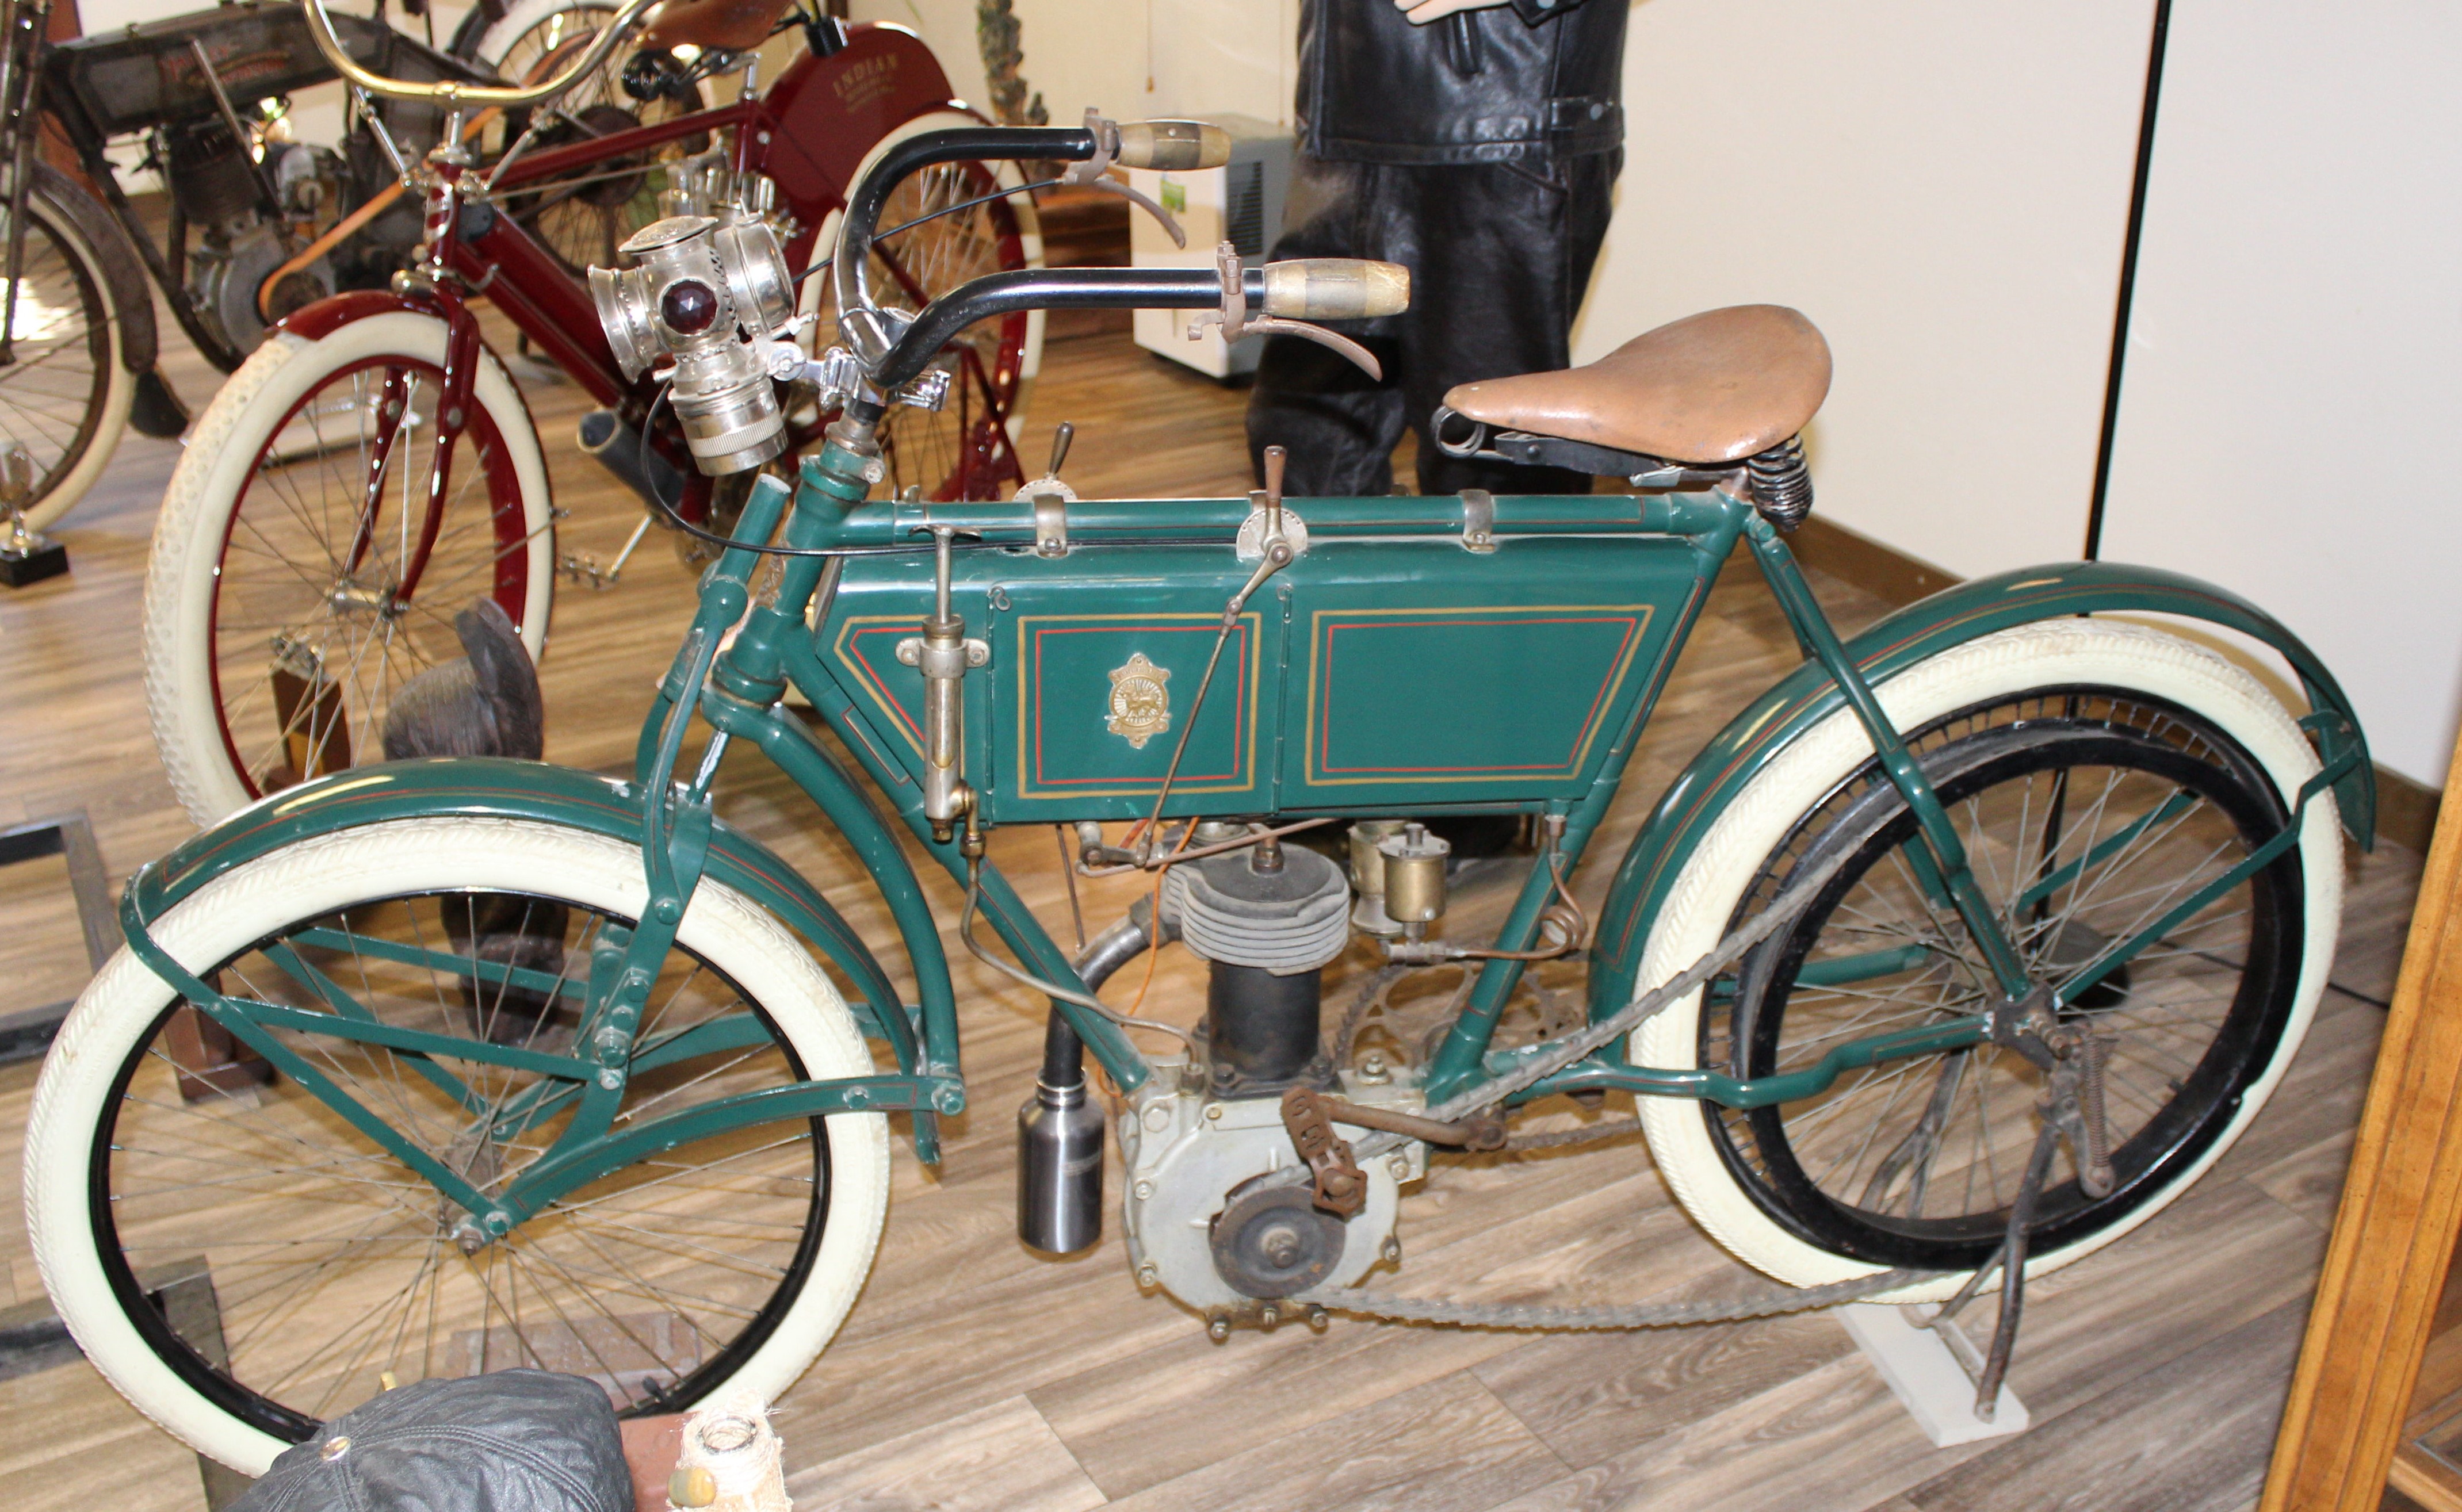 Montz Motorcycle Museum